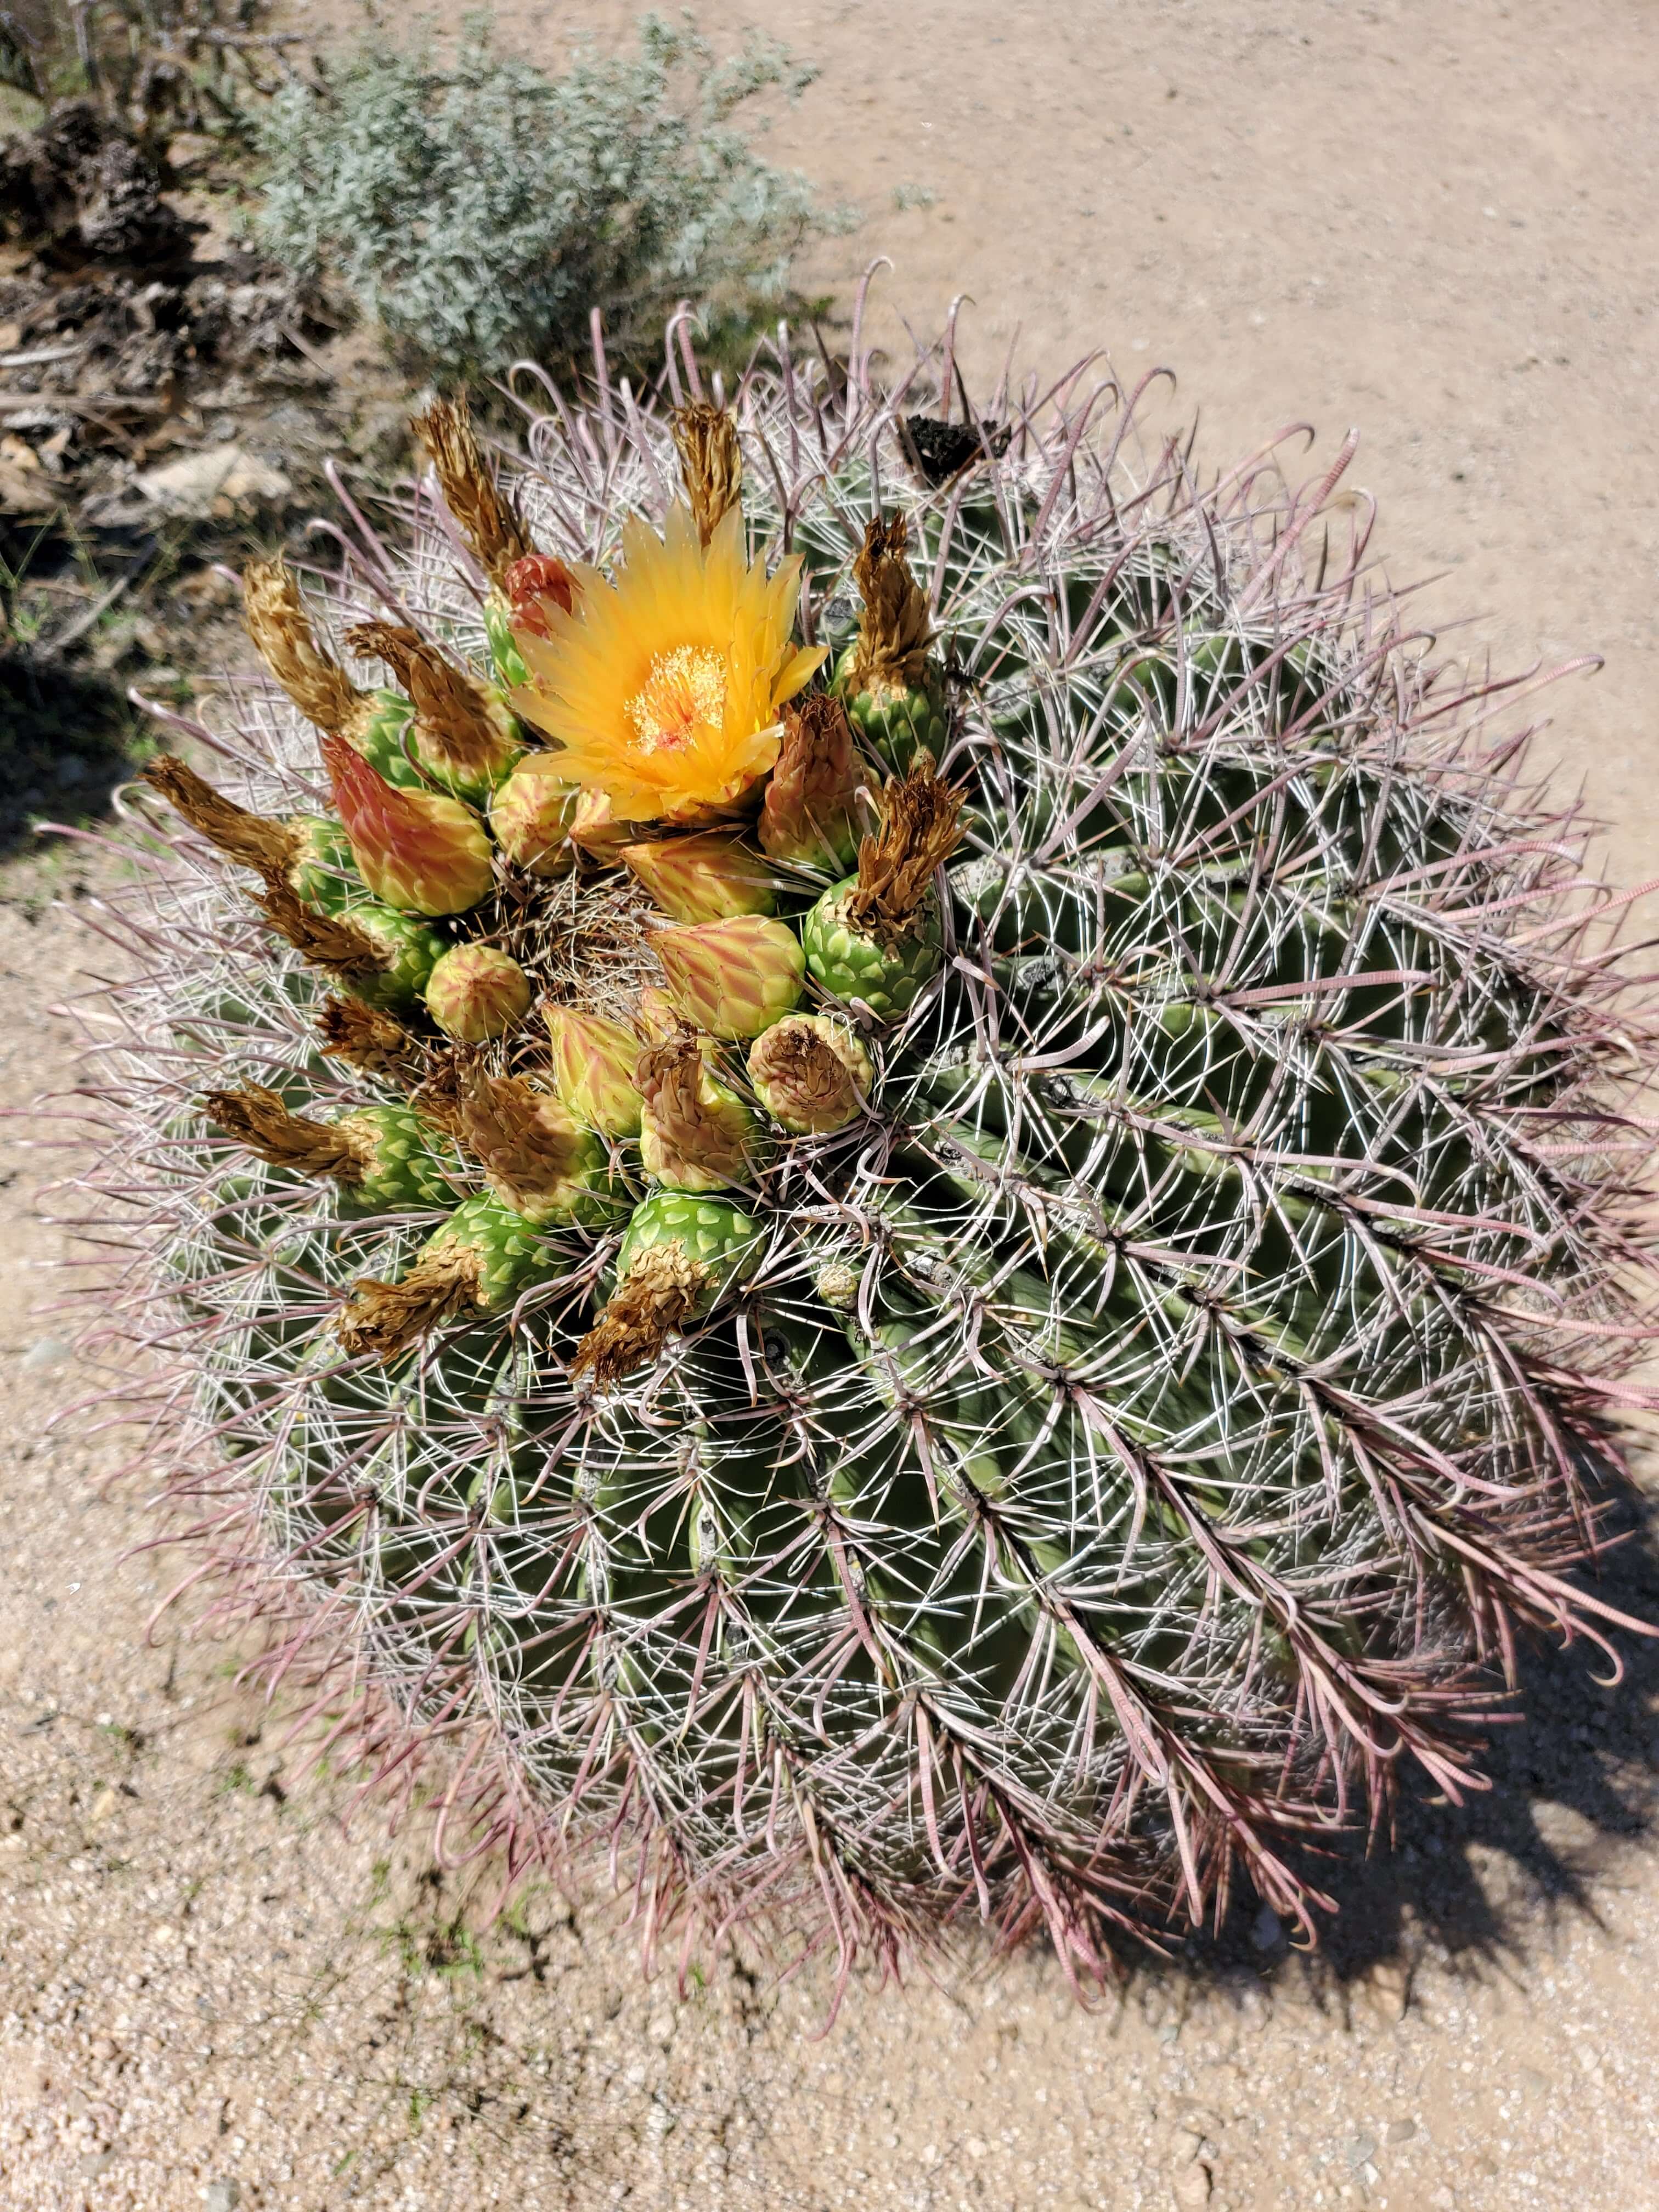 Barrel cactus with an orange bloom at Saguaro National Park